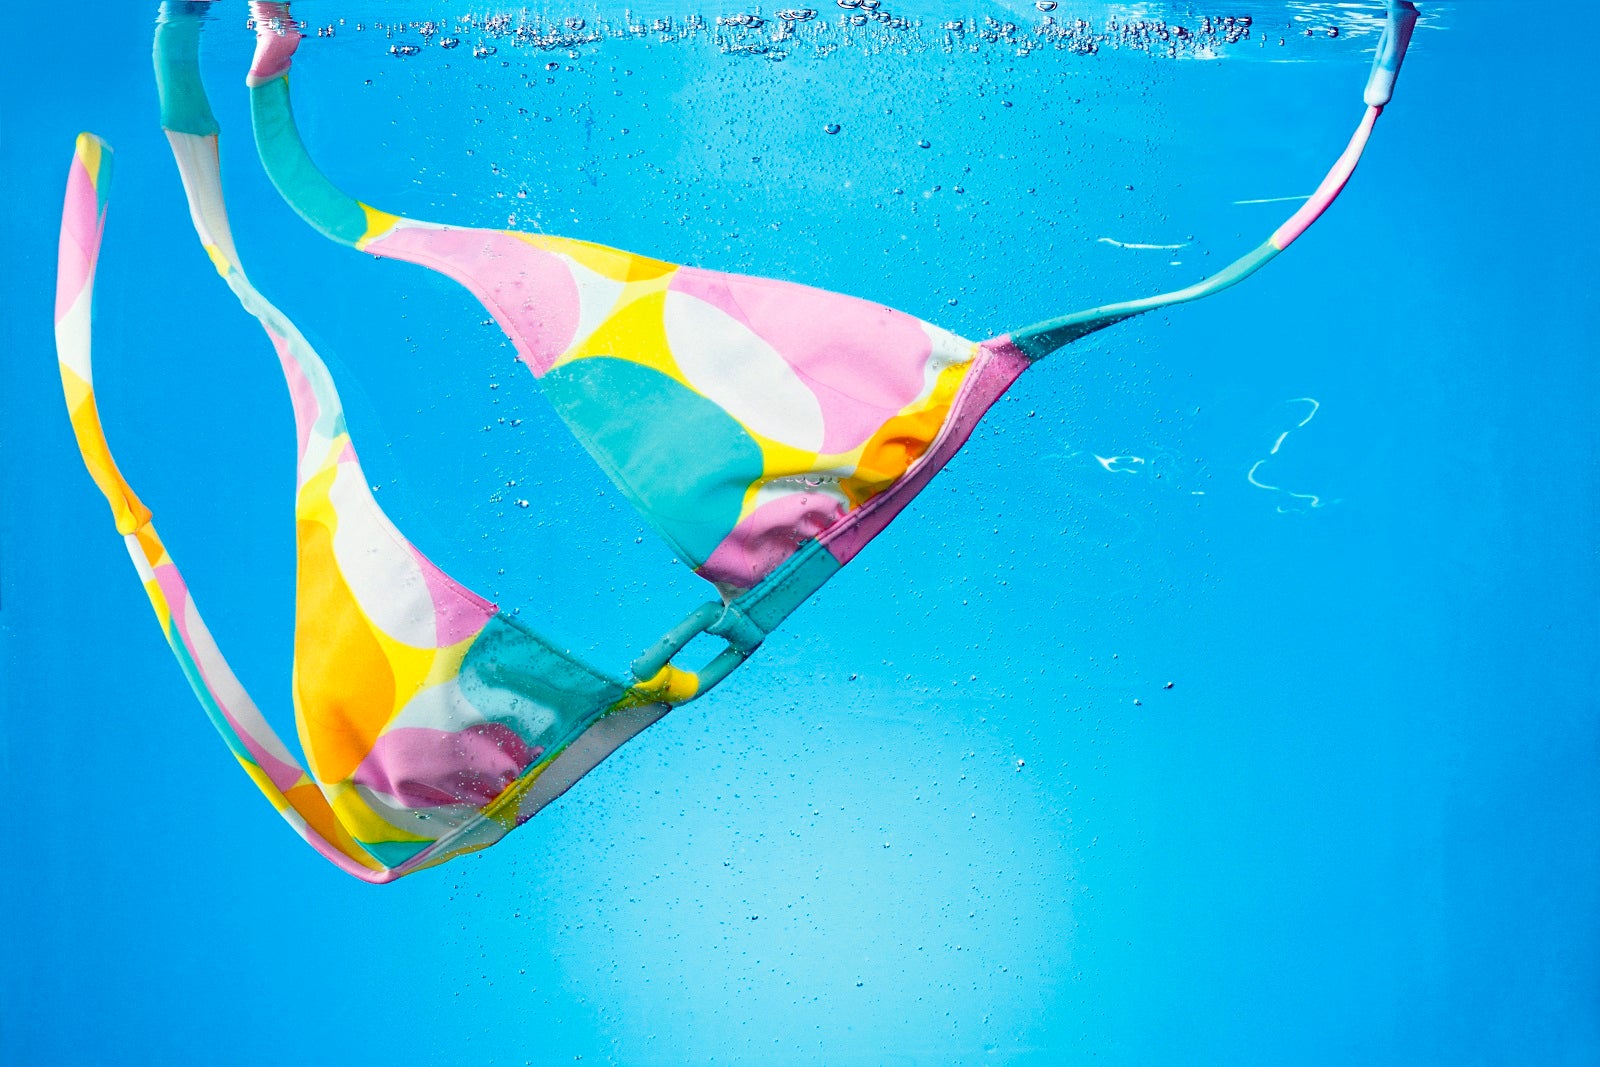 Bikini top in water, underwater view